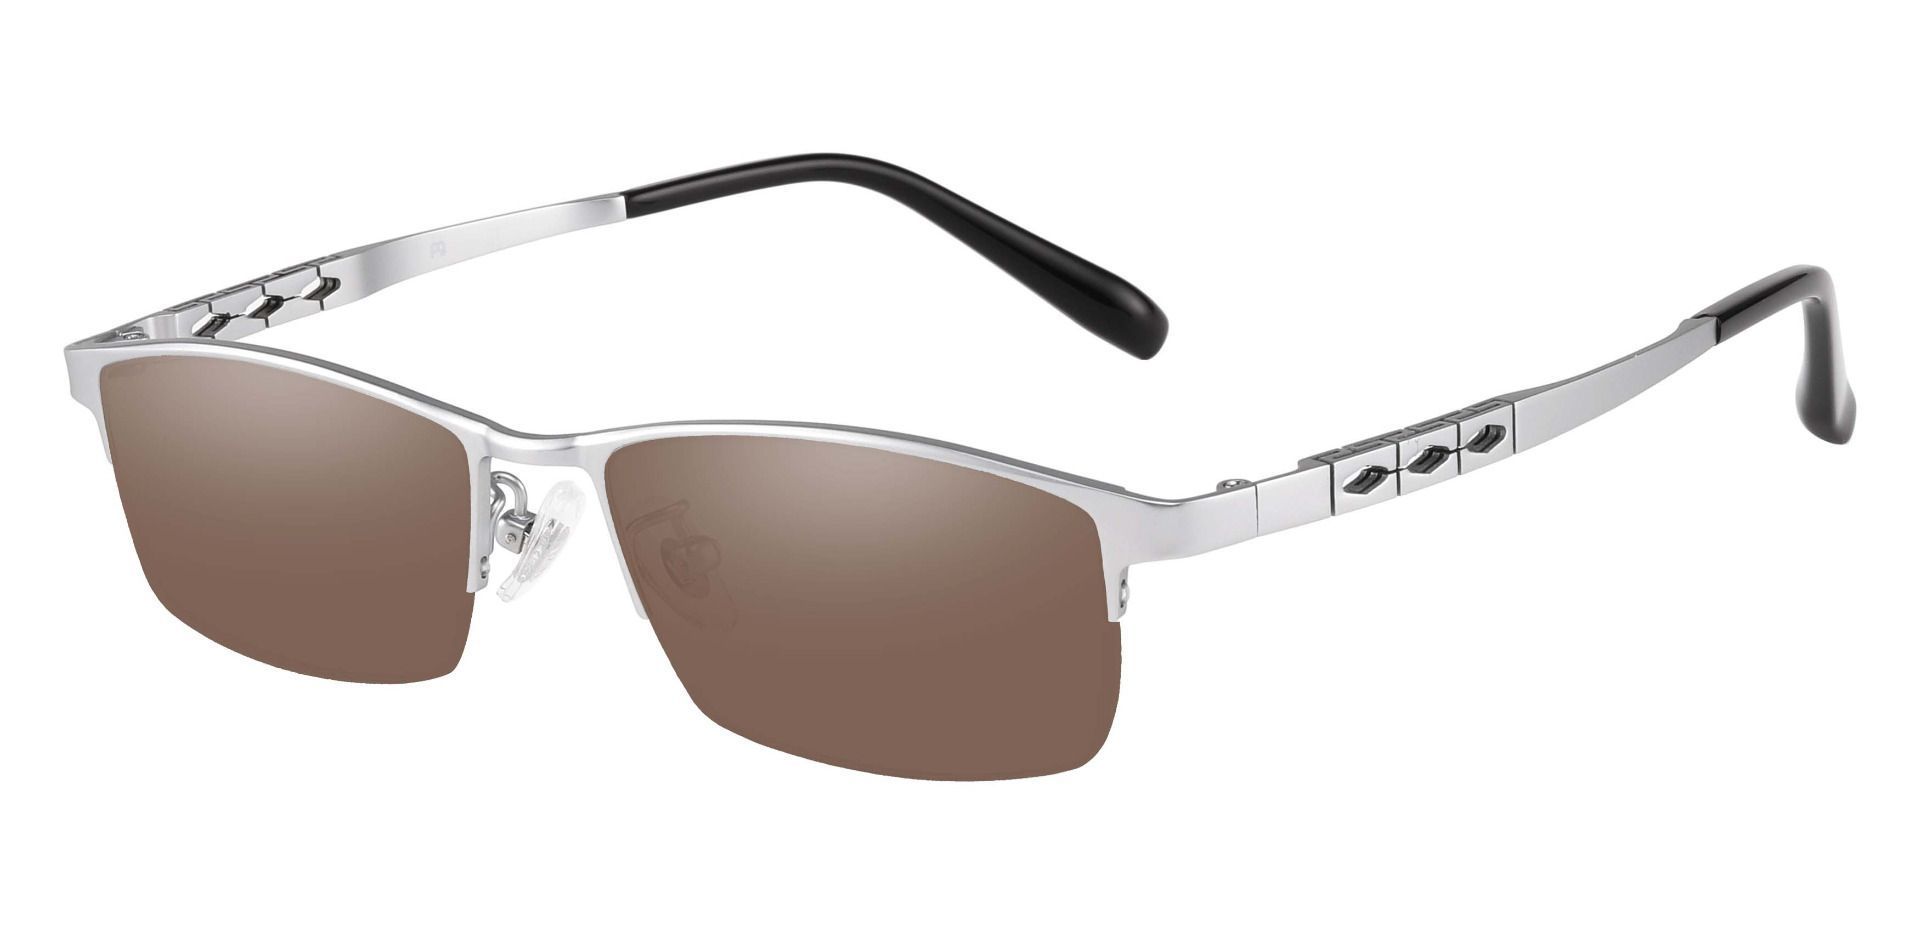 Burlington Rectangle Progressive Sunglasses - Silver Frame With Brown Lenses